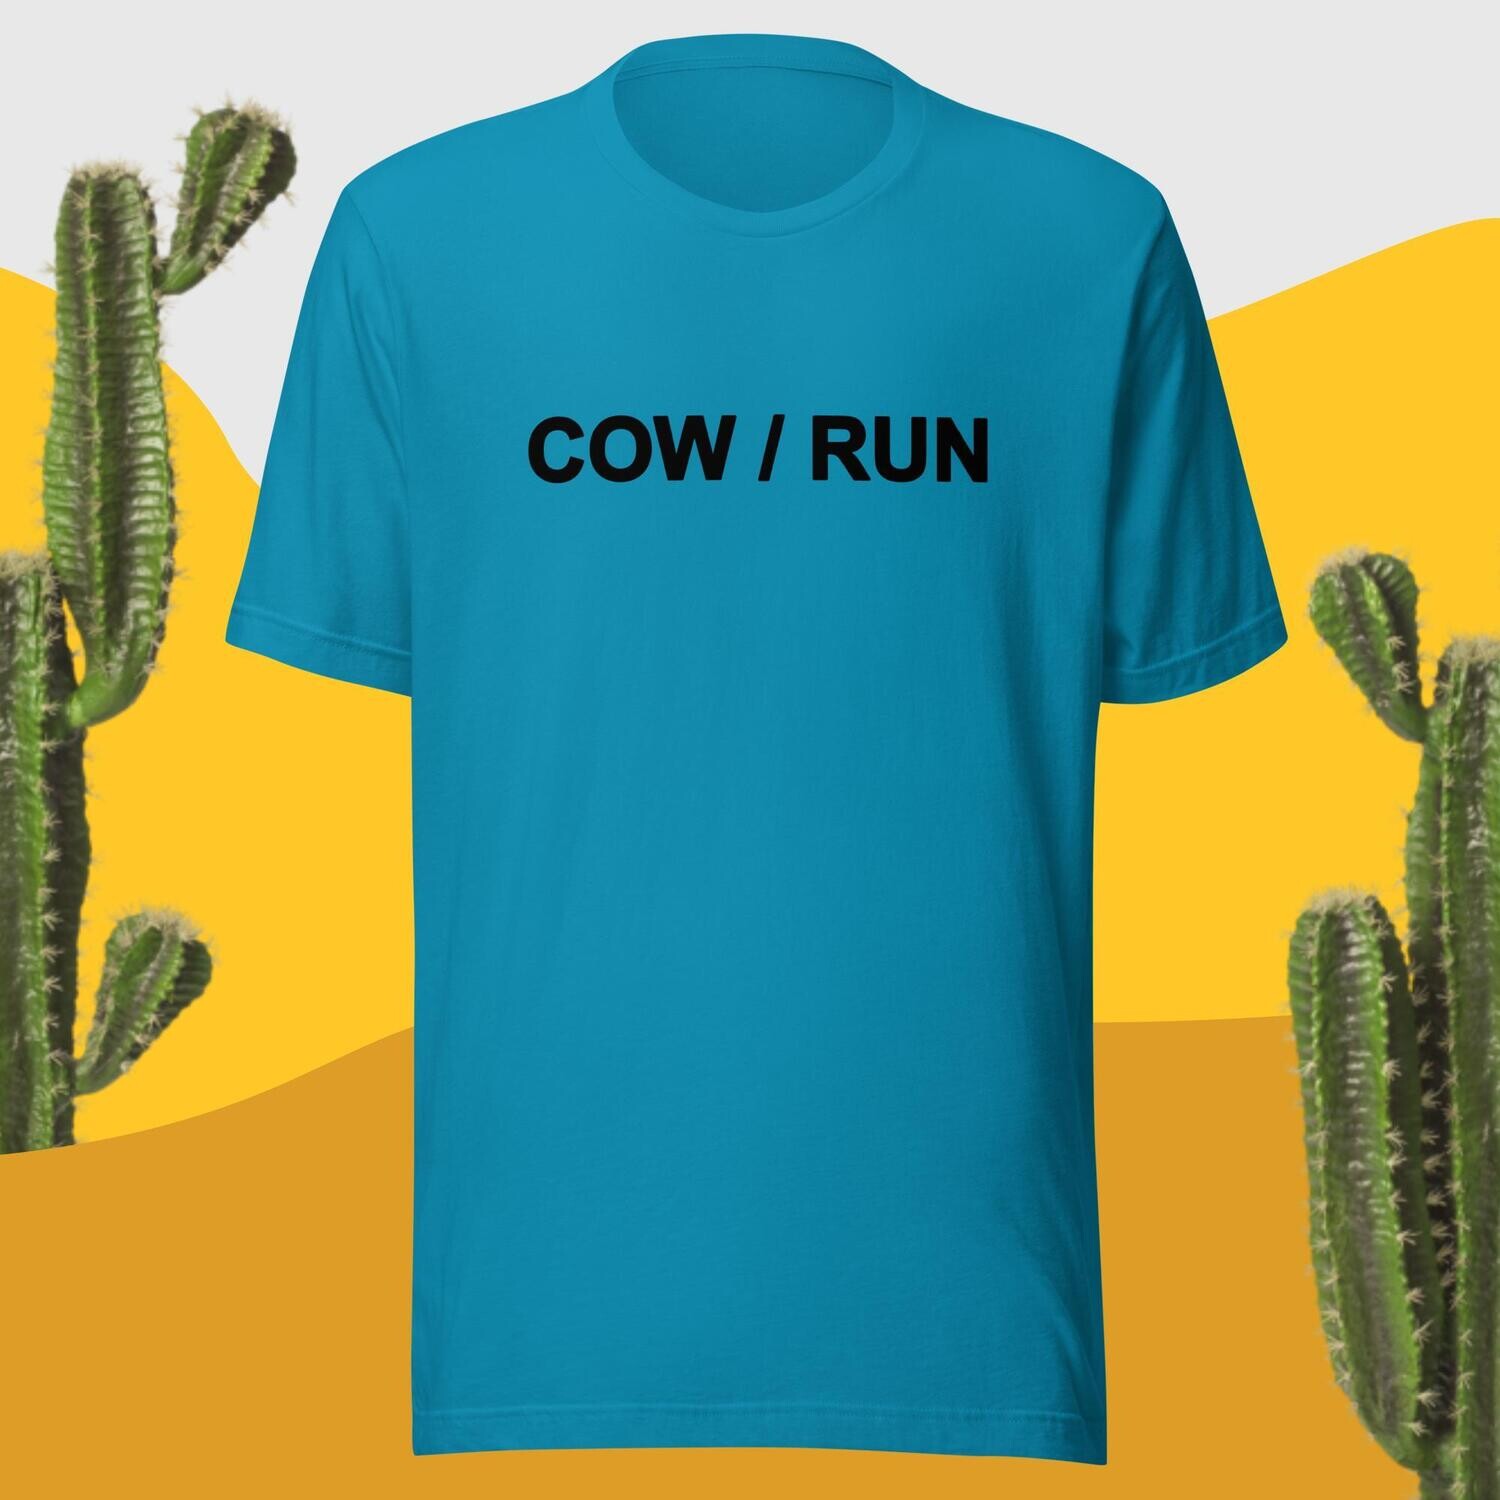 Cow / Run Bright Colors t-shirt